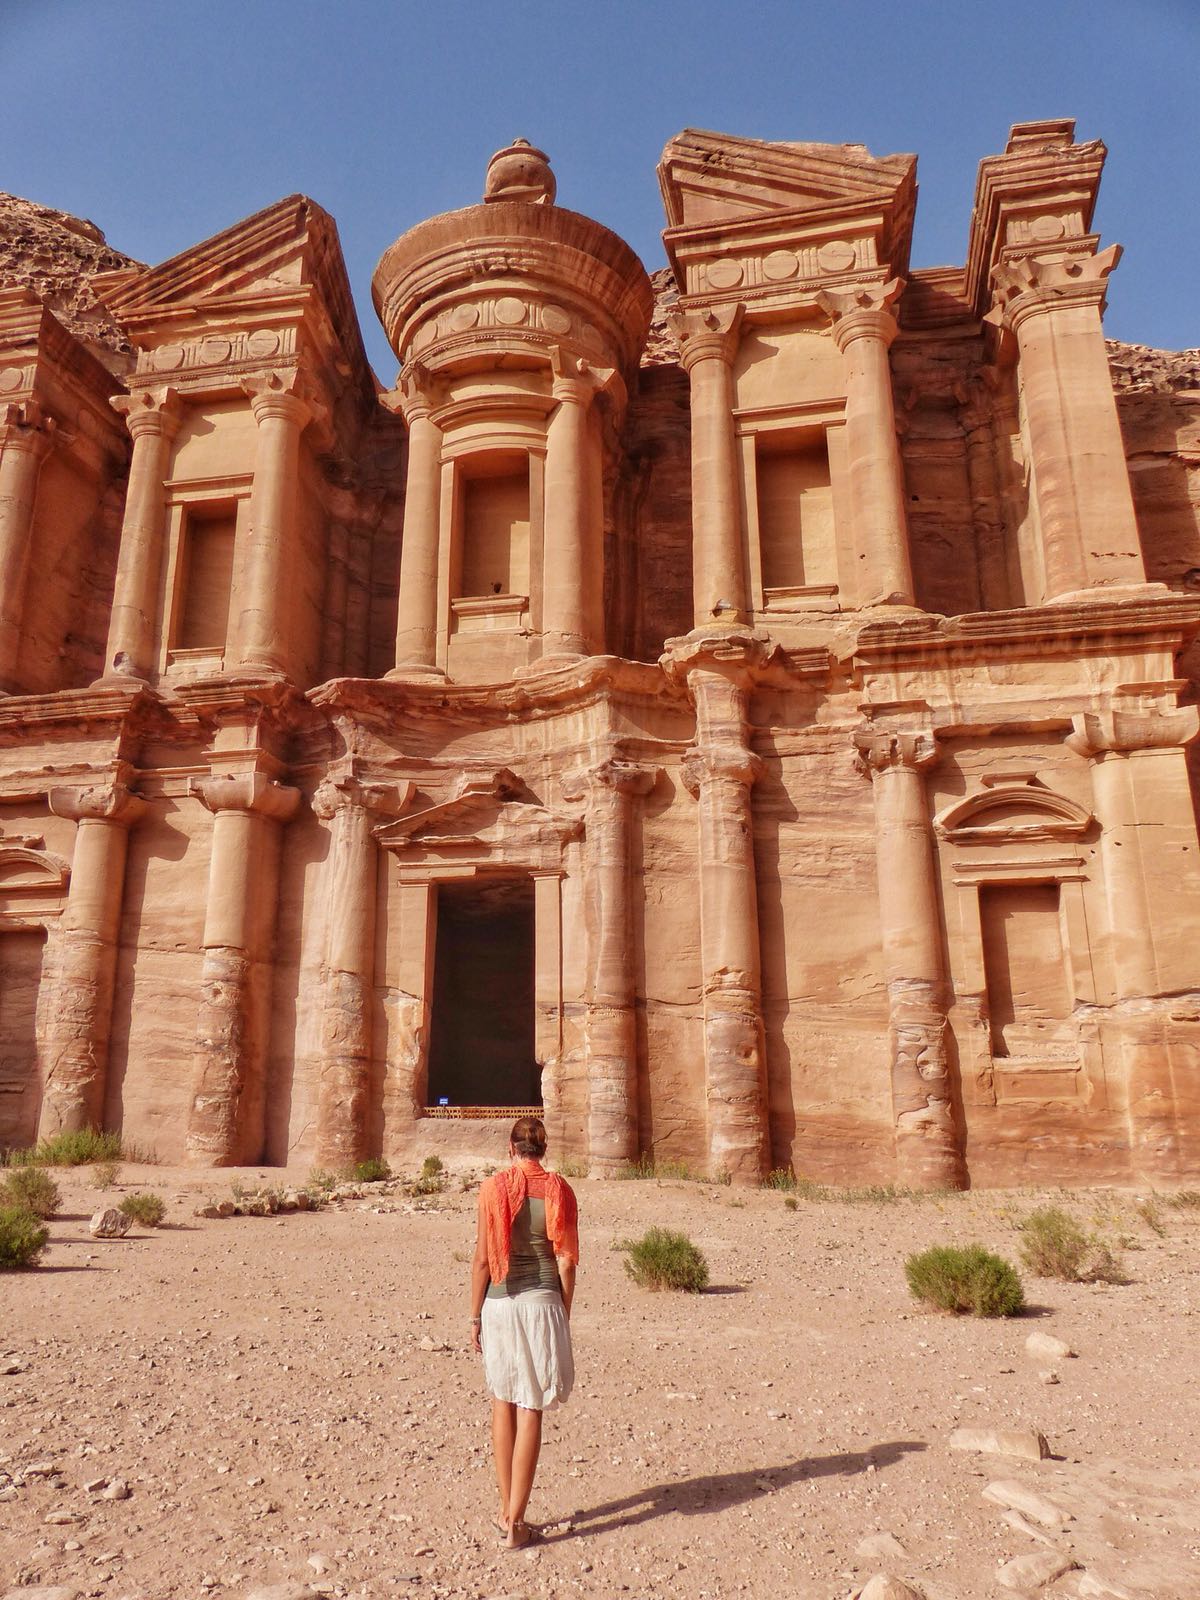 Petra, the Monastery